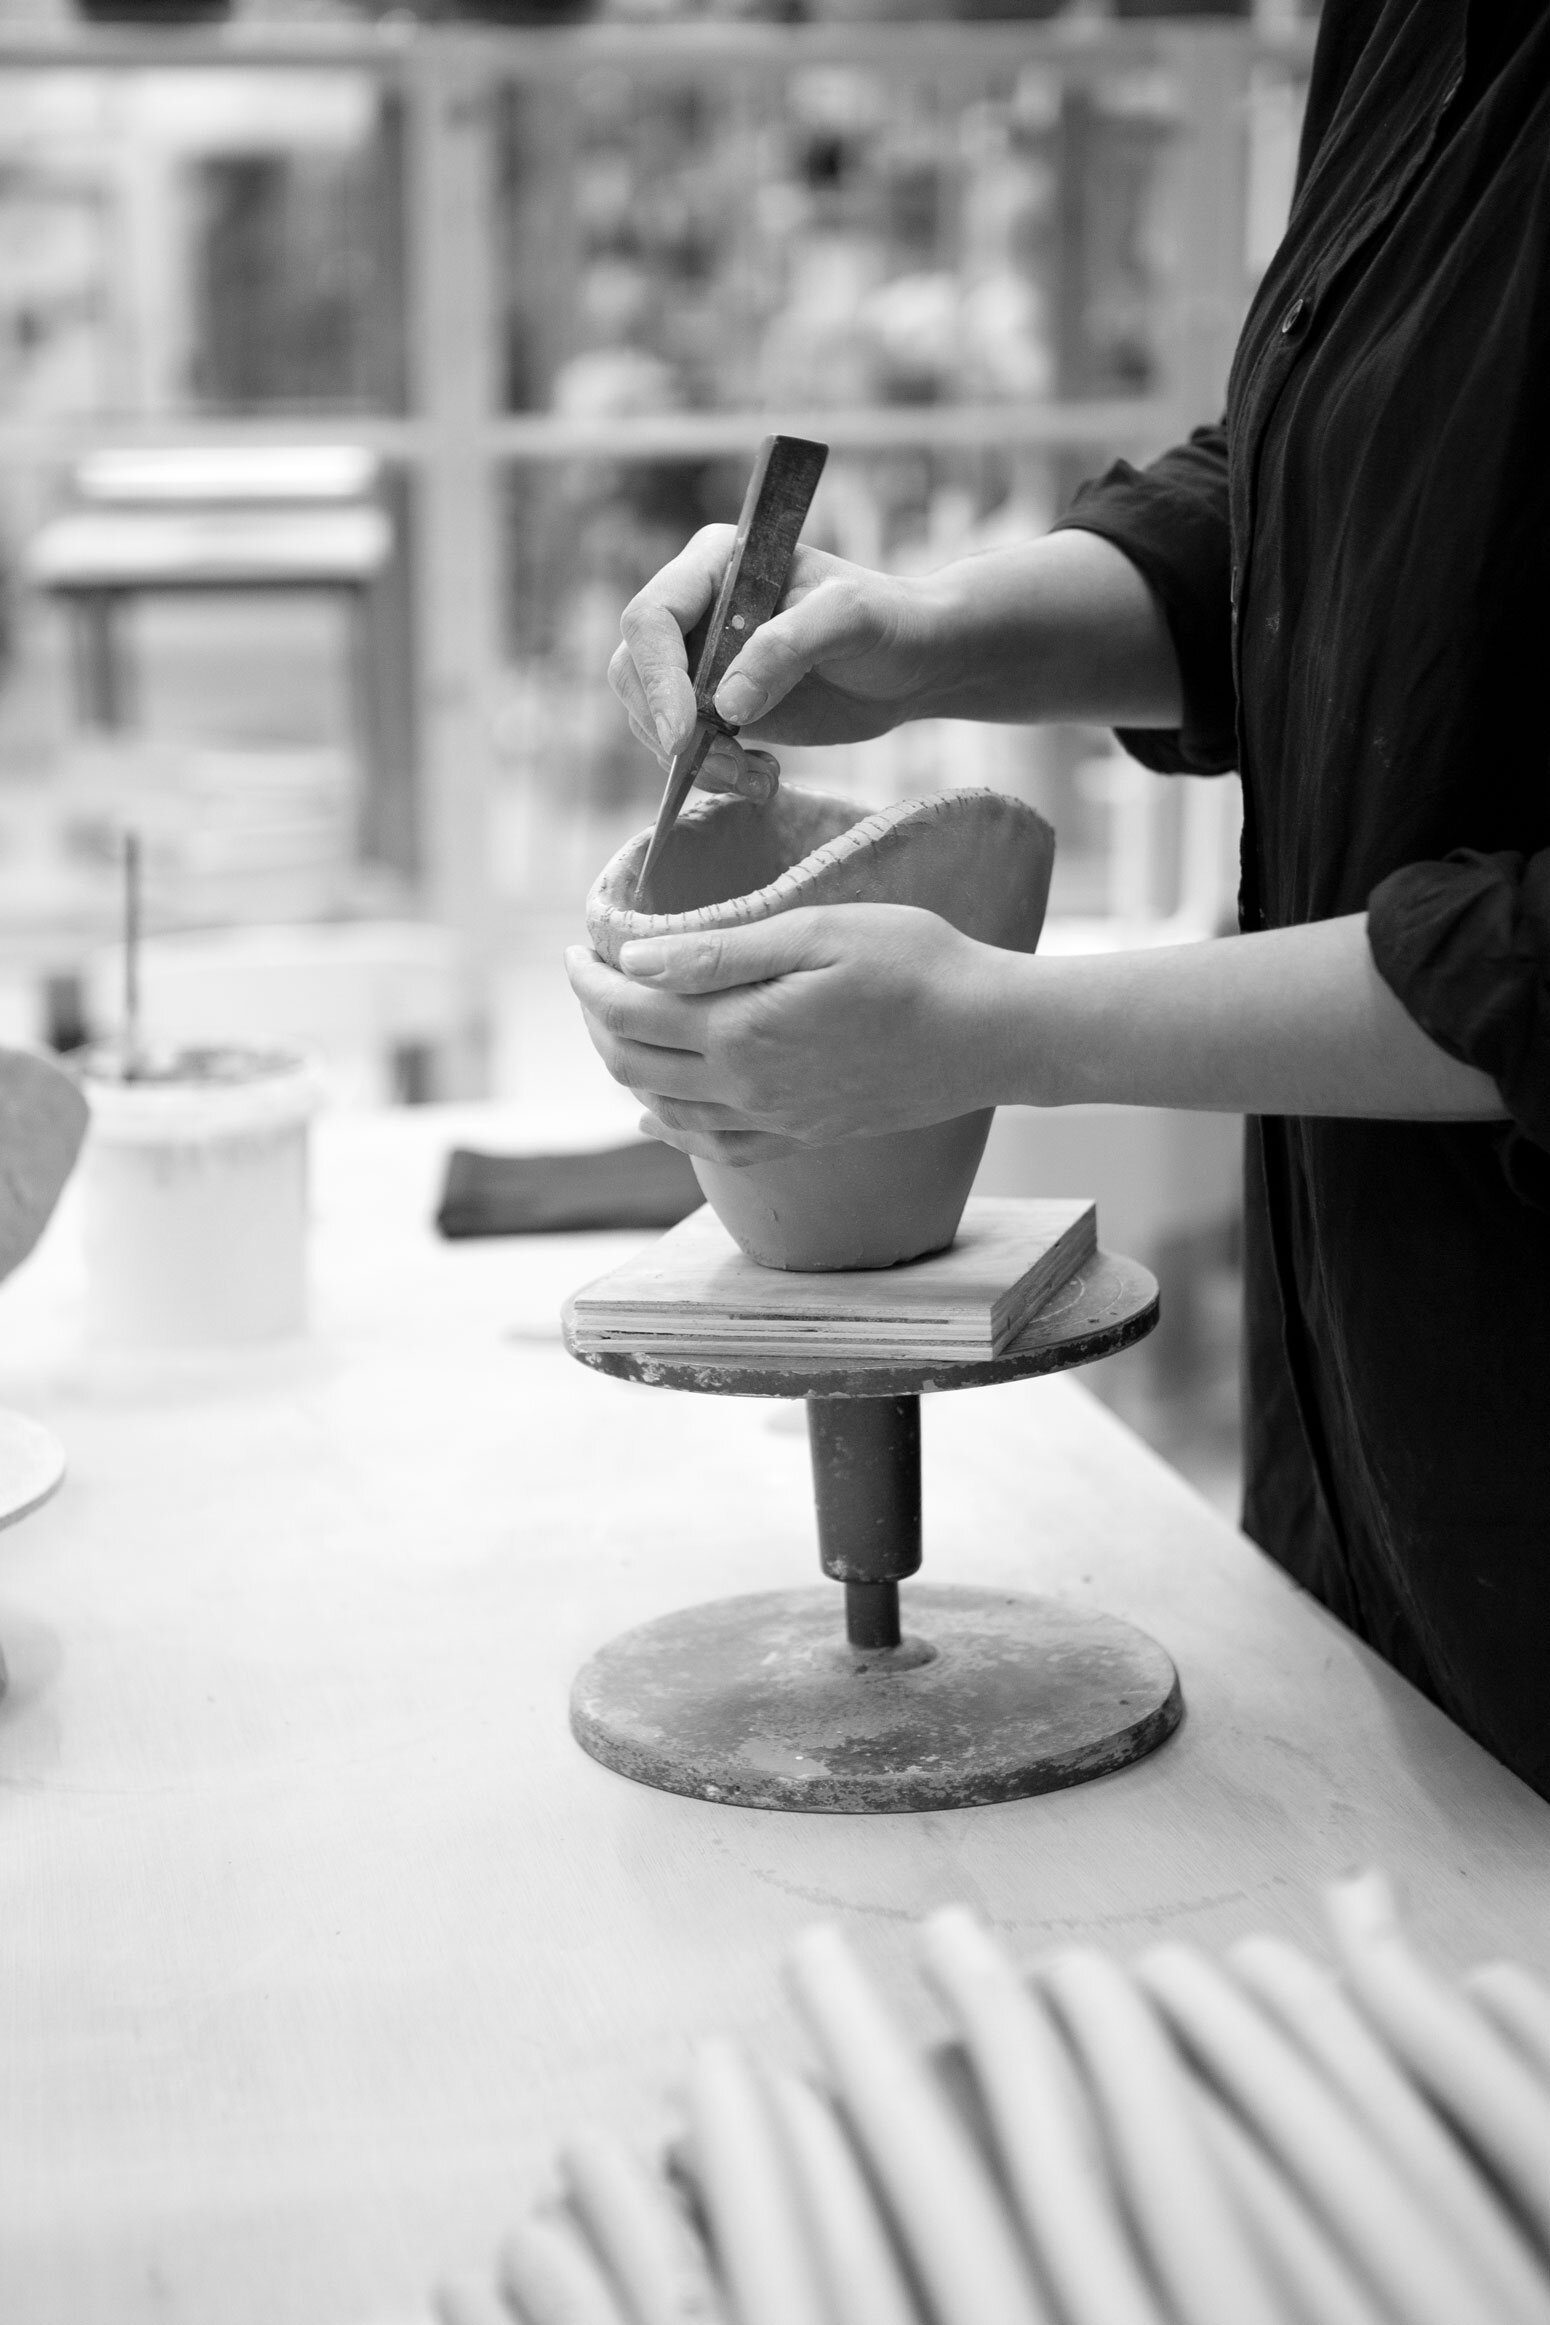 Reimagining the Wheel: Ceramics Students Blend Identity & Craft